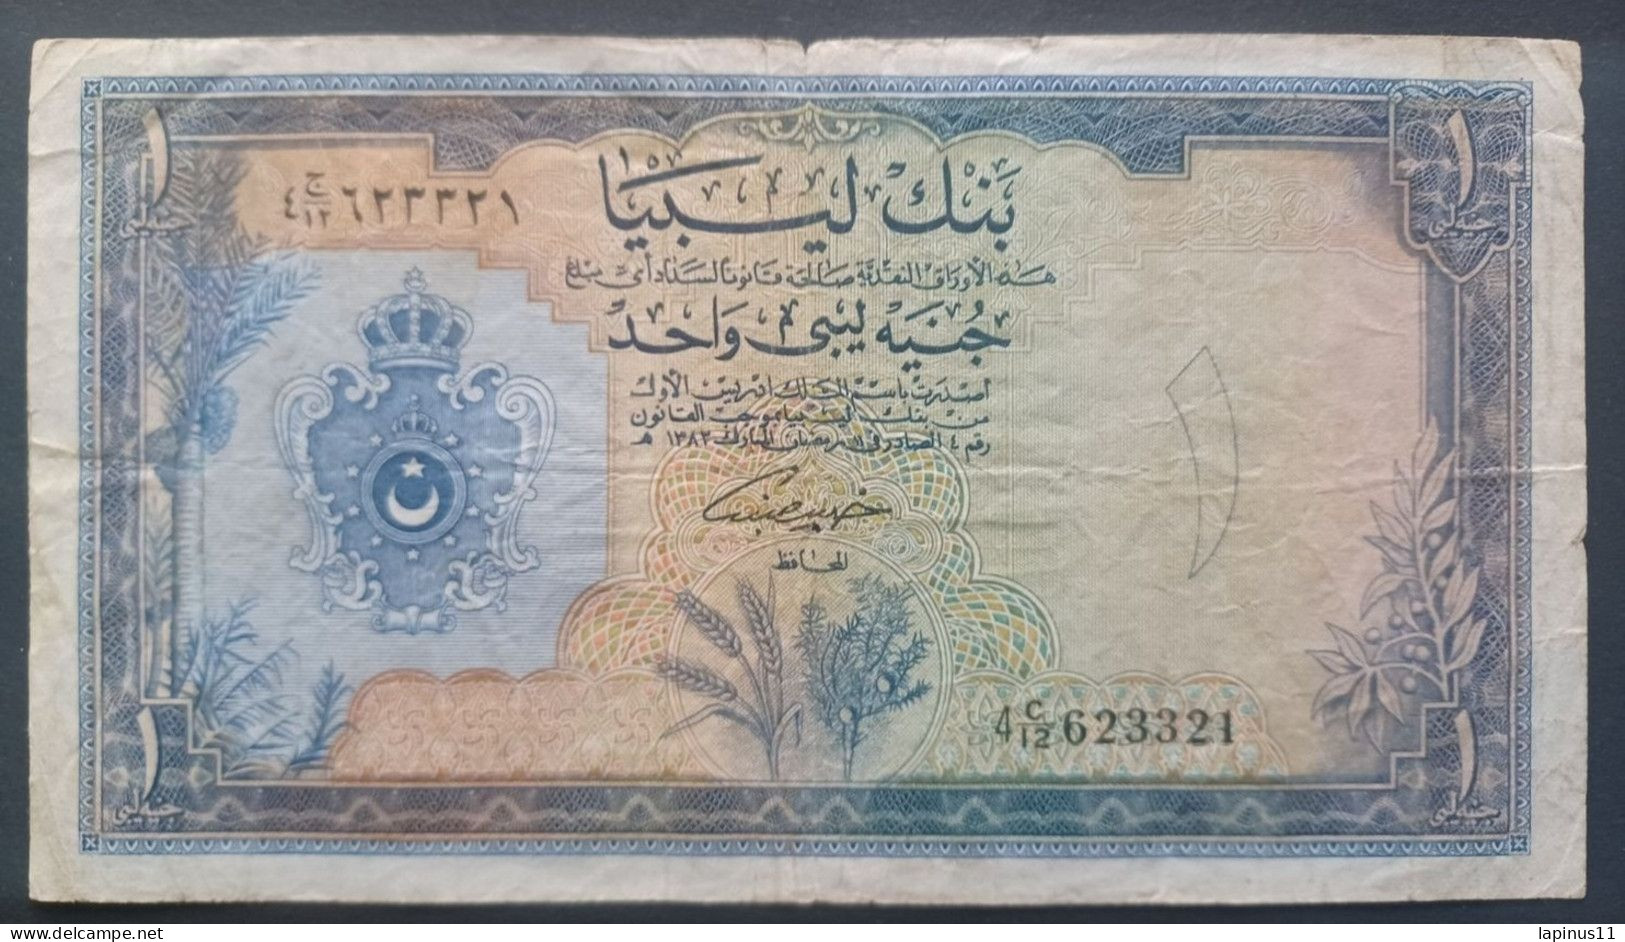 BANKNOTE LIBYA LIBIA 1 POUND 1963 VERY RARE CIRCULATED - Libië